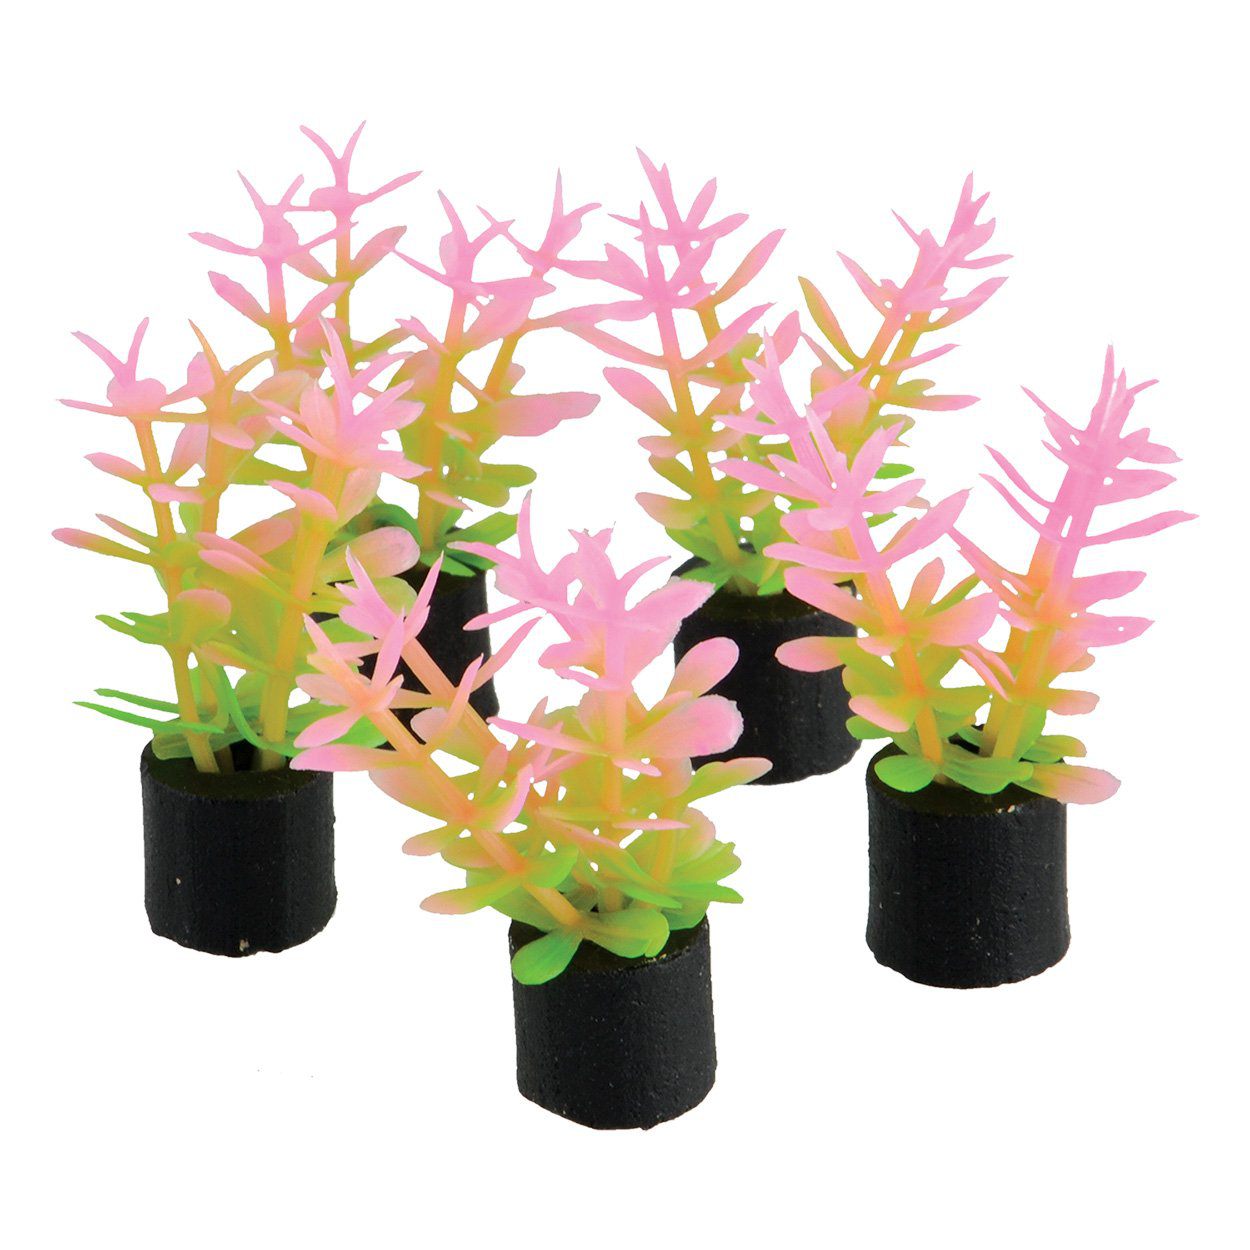 Underwater Treasures | Mini Plant - Pink And Green - 1.5" - 5 pk 628742014392 Super Cichlids